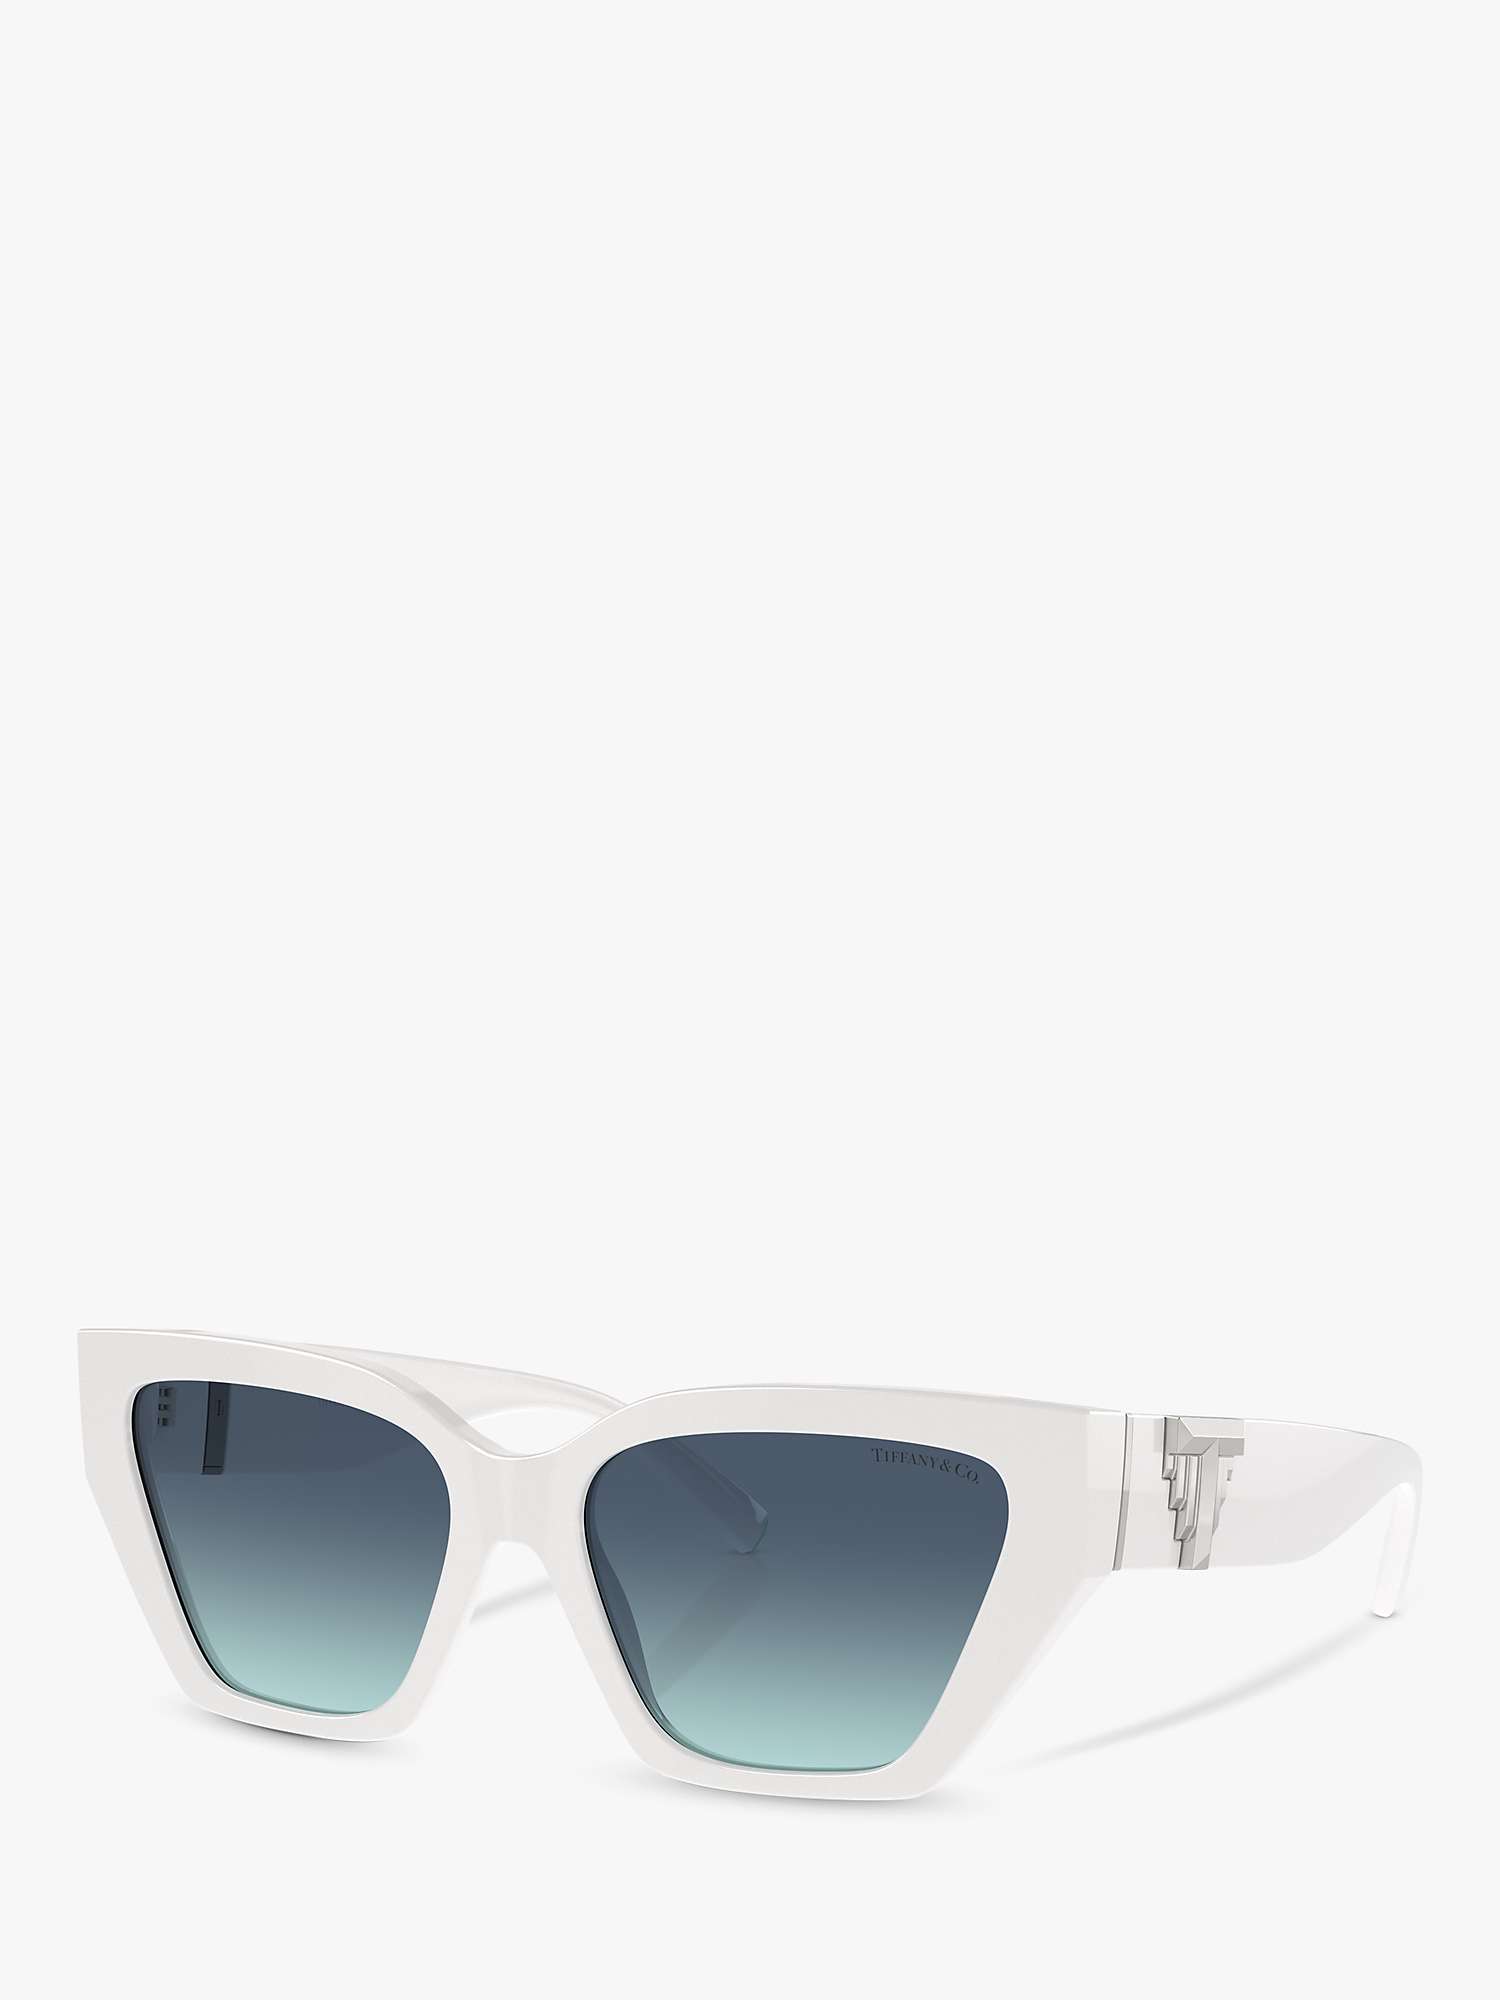 Buy Tiffany & Co TF4218 Women's Squared Cat's Eye Sunglasses, White/Blue Gradient Online at johnlewis.com